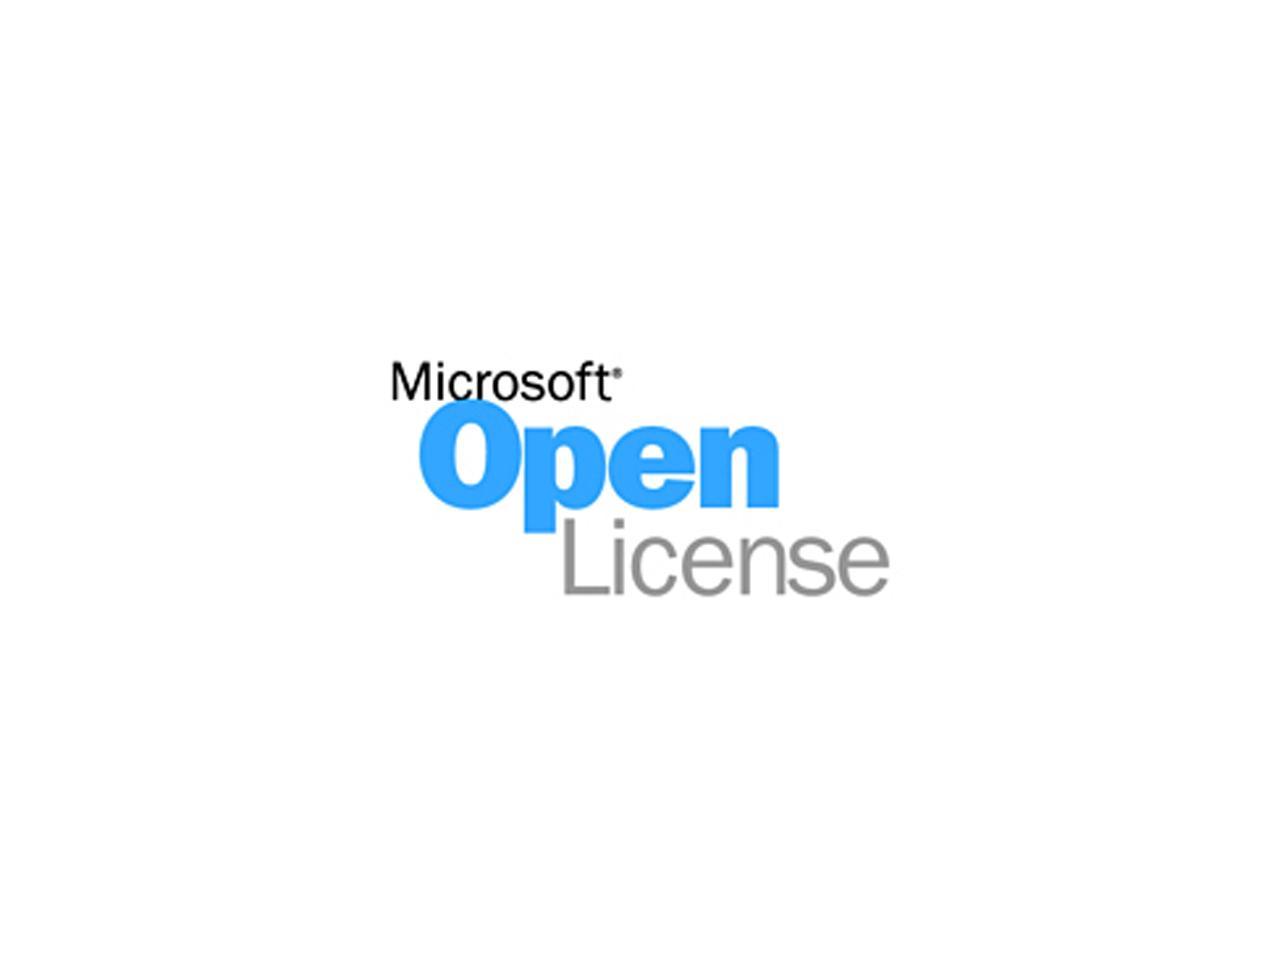 Microsoft Office Professional Plus -License & Software Assurance